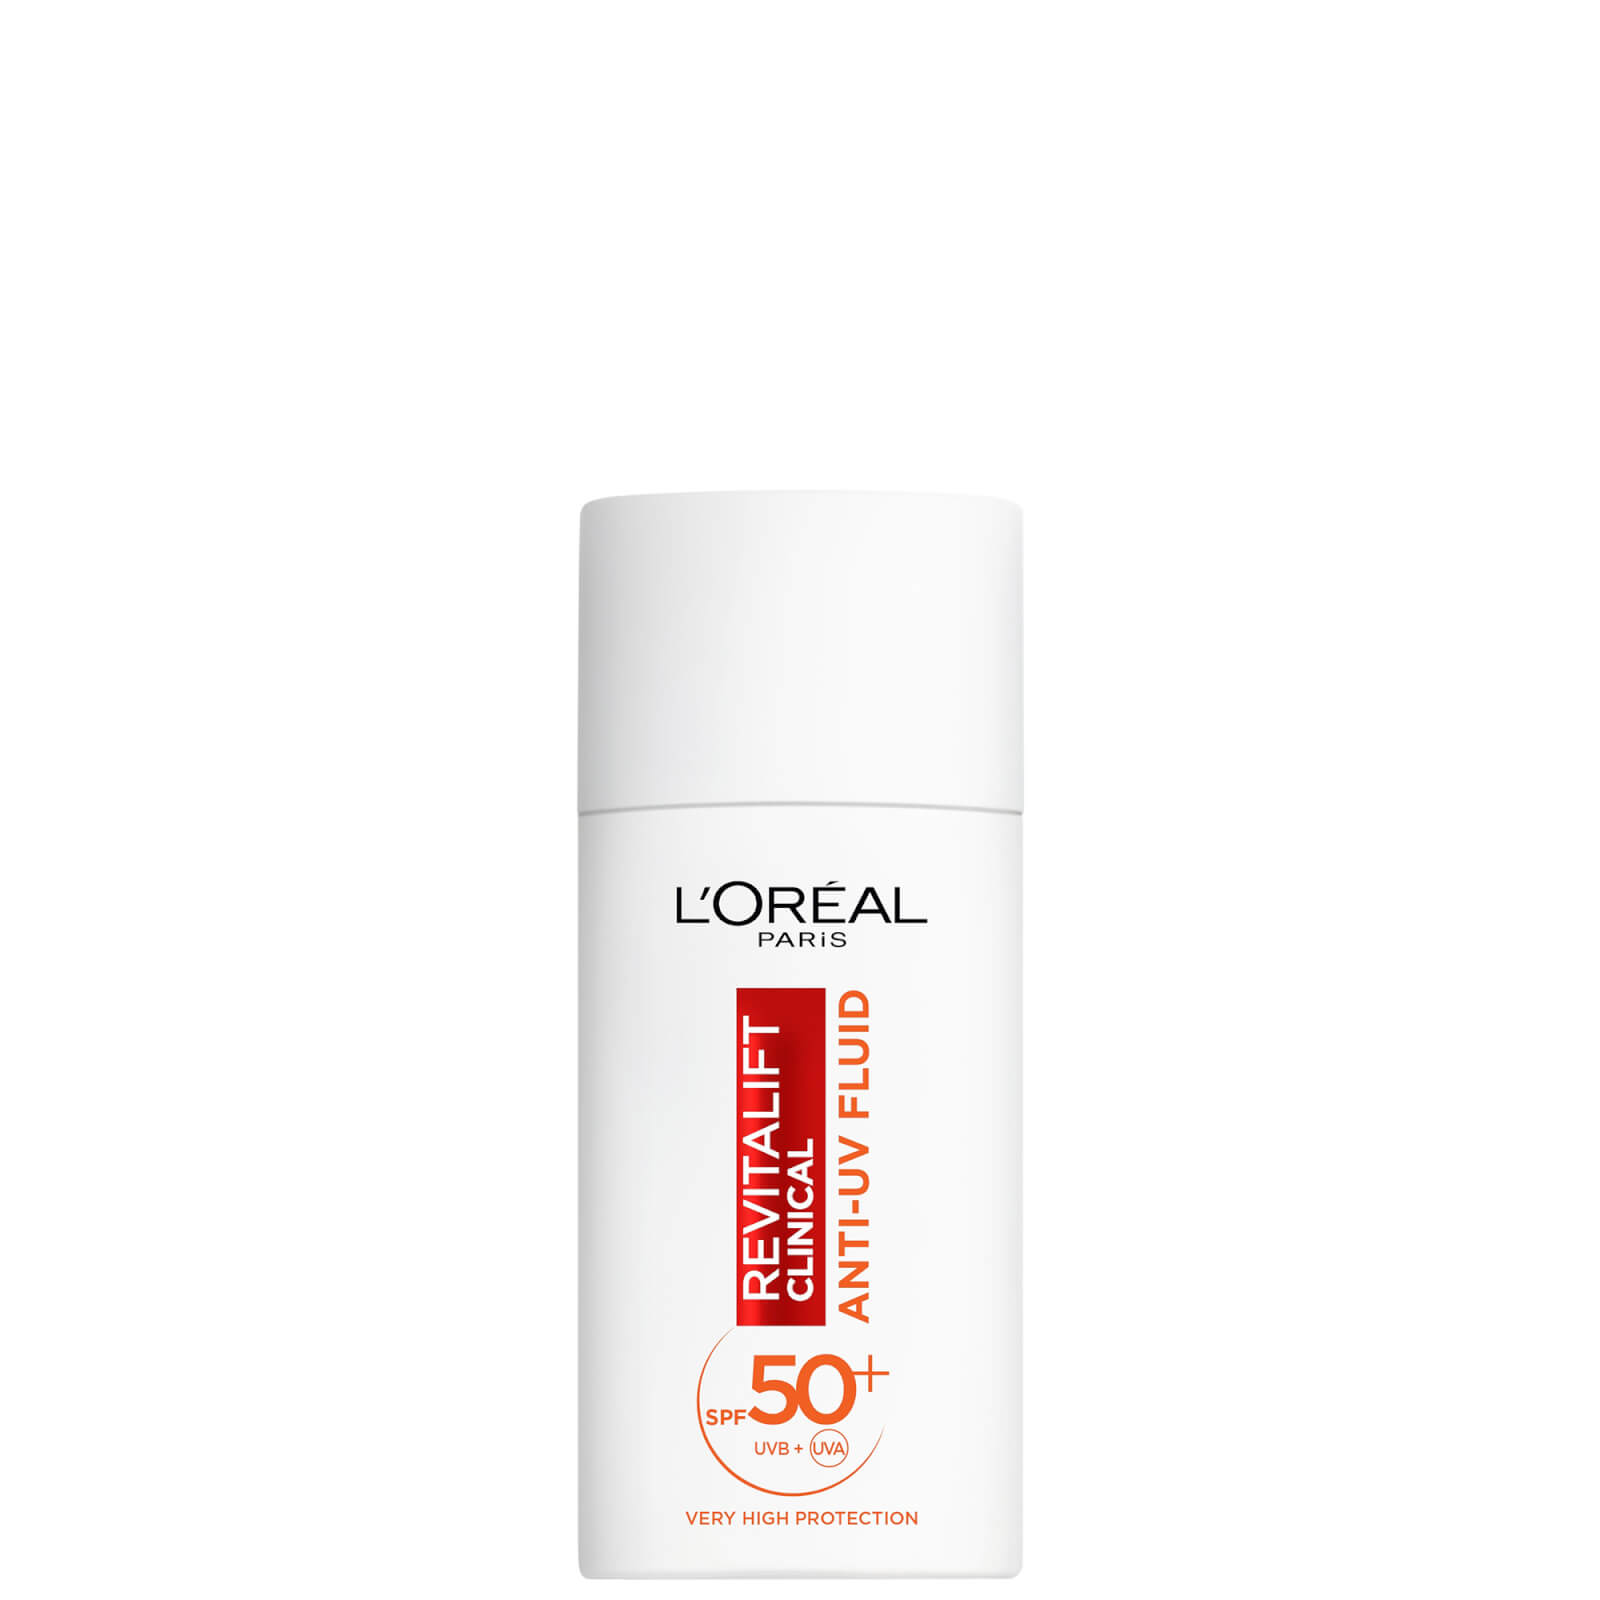 L'oréal Paris Revitalift Clinical Vitamin C Uv Fluid Spf 50+ Moisturiser 50ml In White